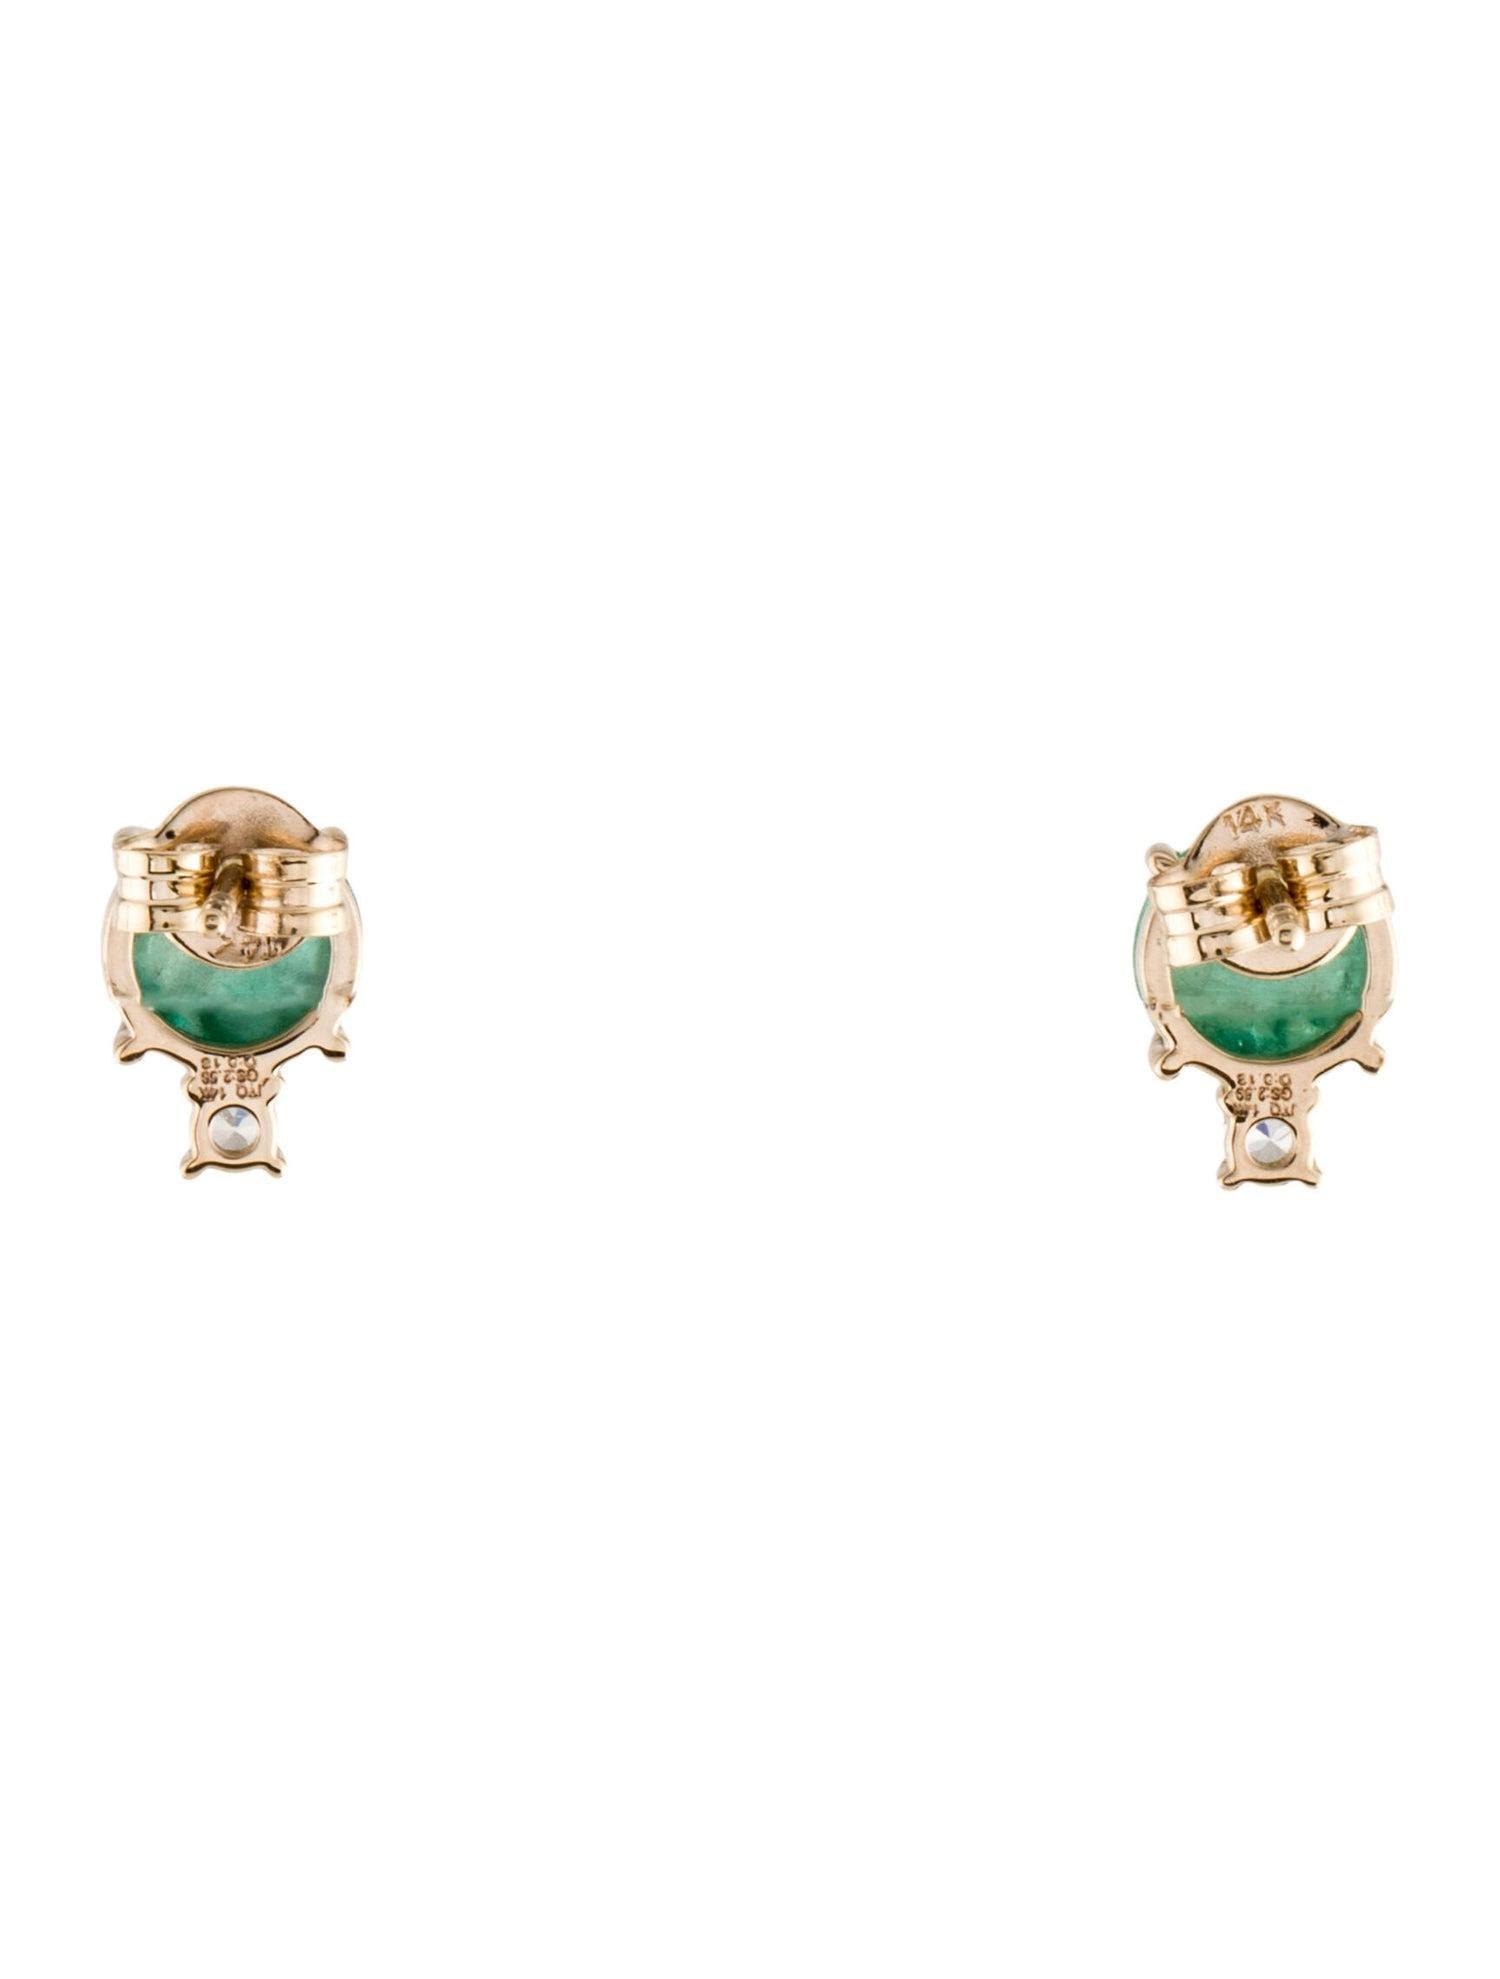 Brilliant Cut Stunning 14K Emerald & Diamond Stud Earrings - Classic Elegance Jewelry For Sale